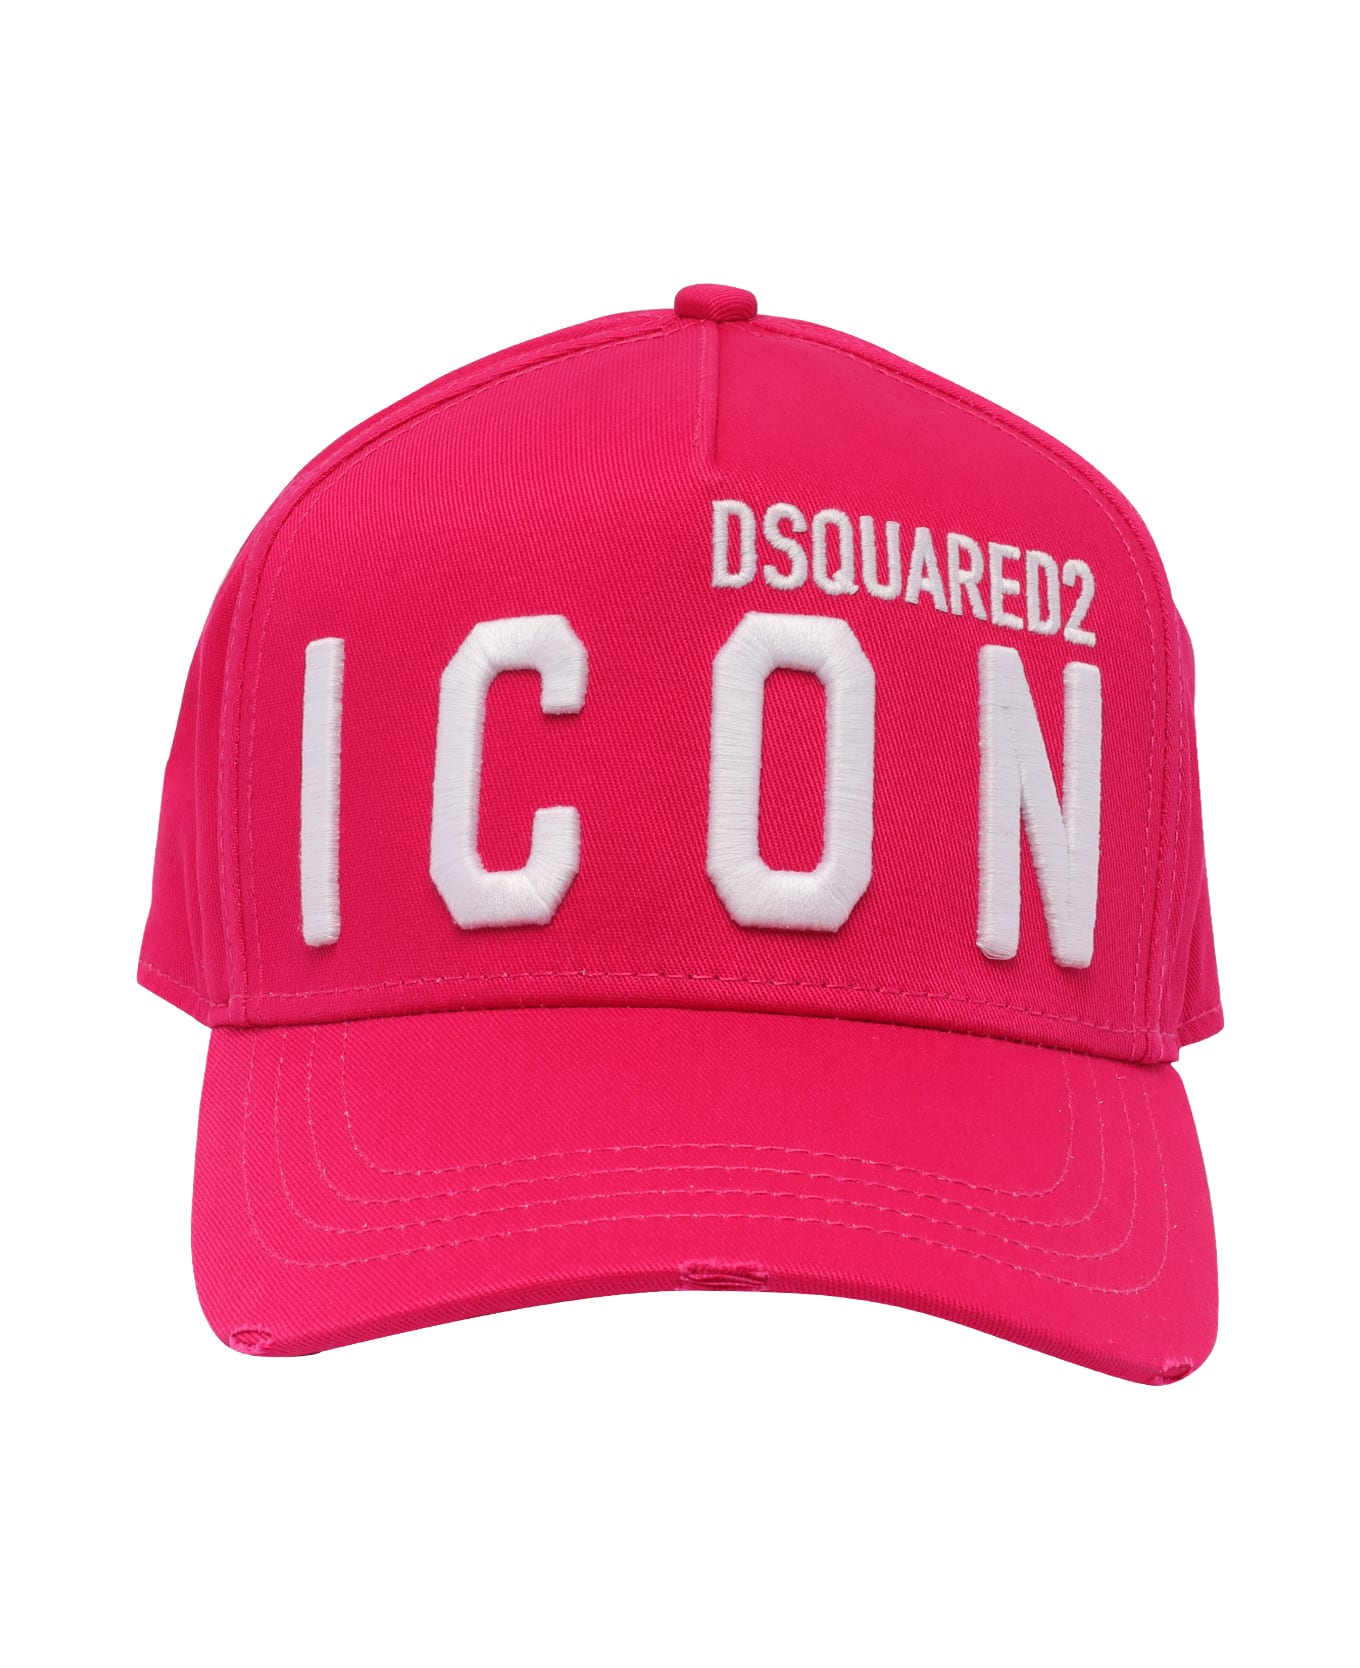 Dsquared2 Be Icon Baseball Cap - Fuchsia